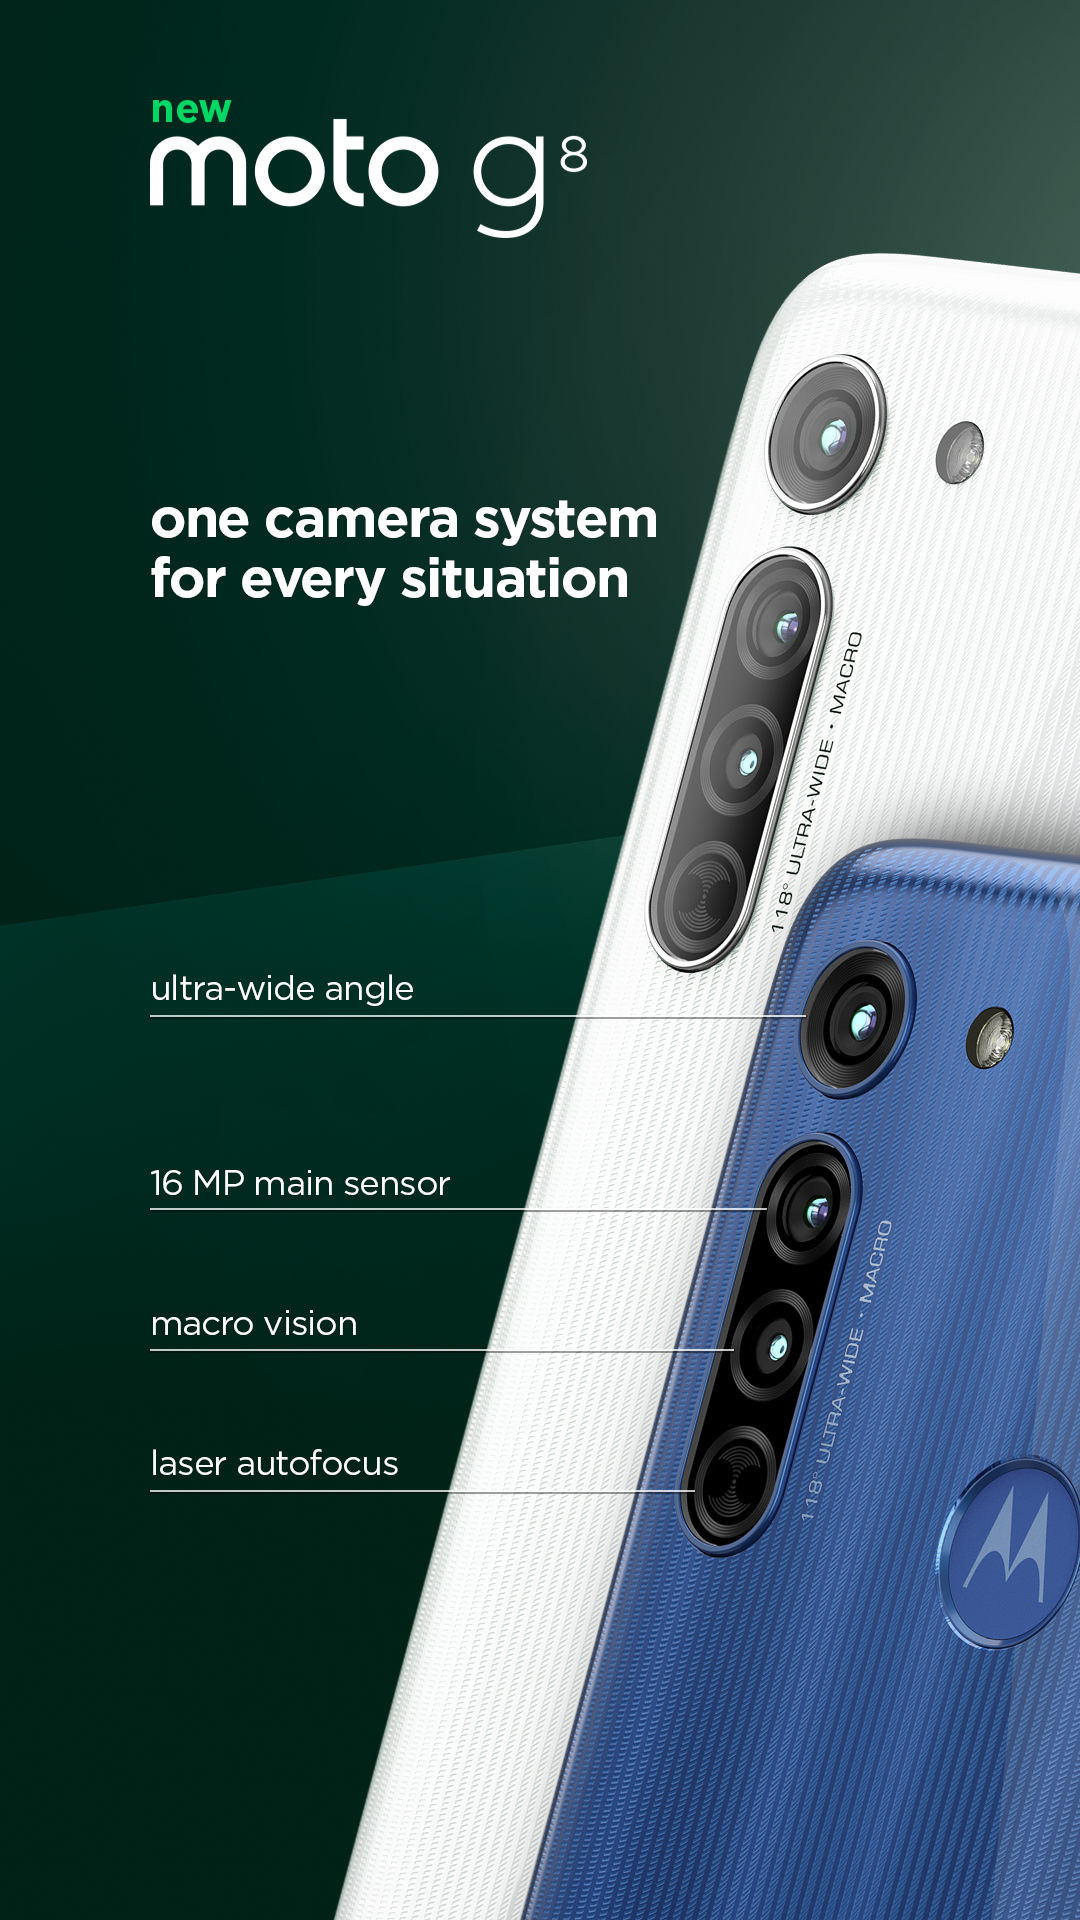 MotoG8 ConsiderationStatic TripleCam 9x16 Motorola’s High Value moto g8 Smartphone Coming To Oz